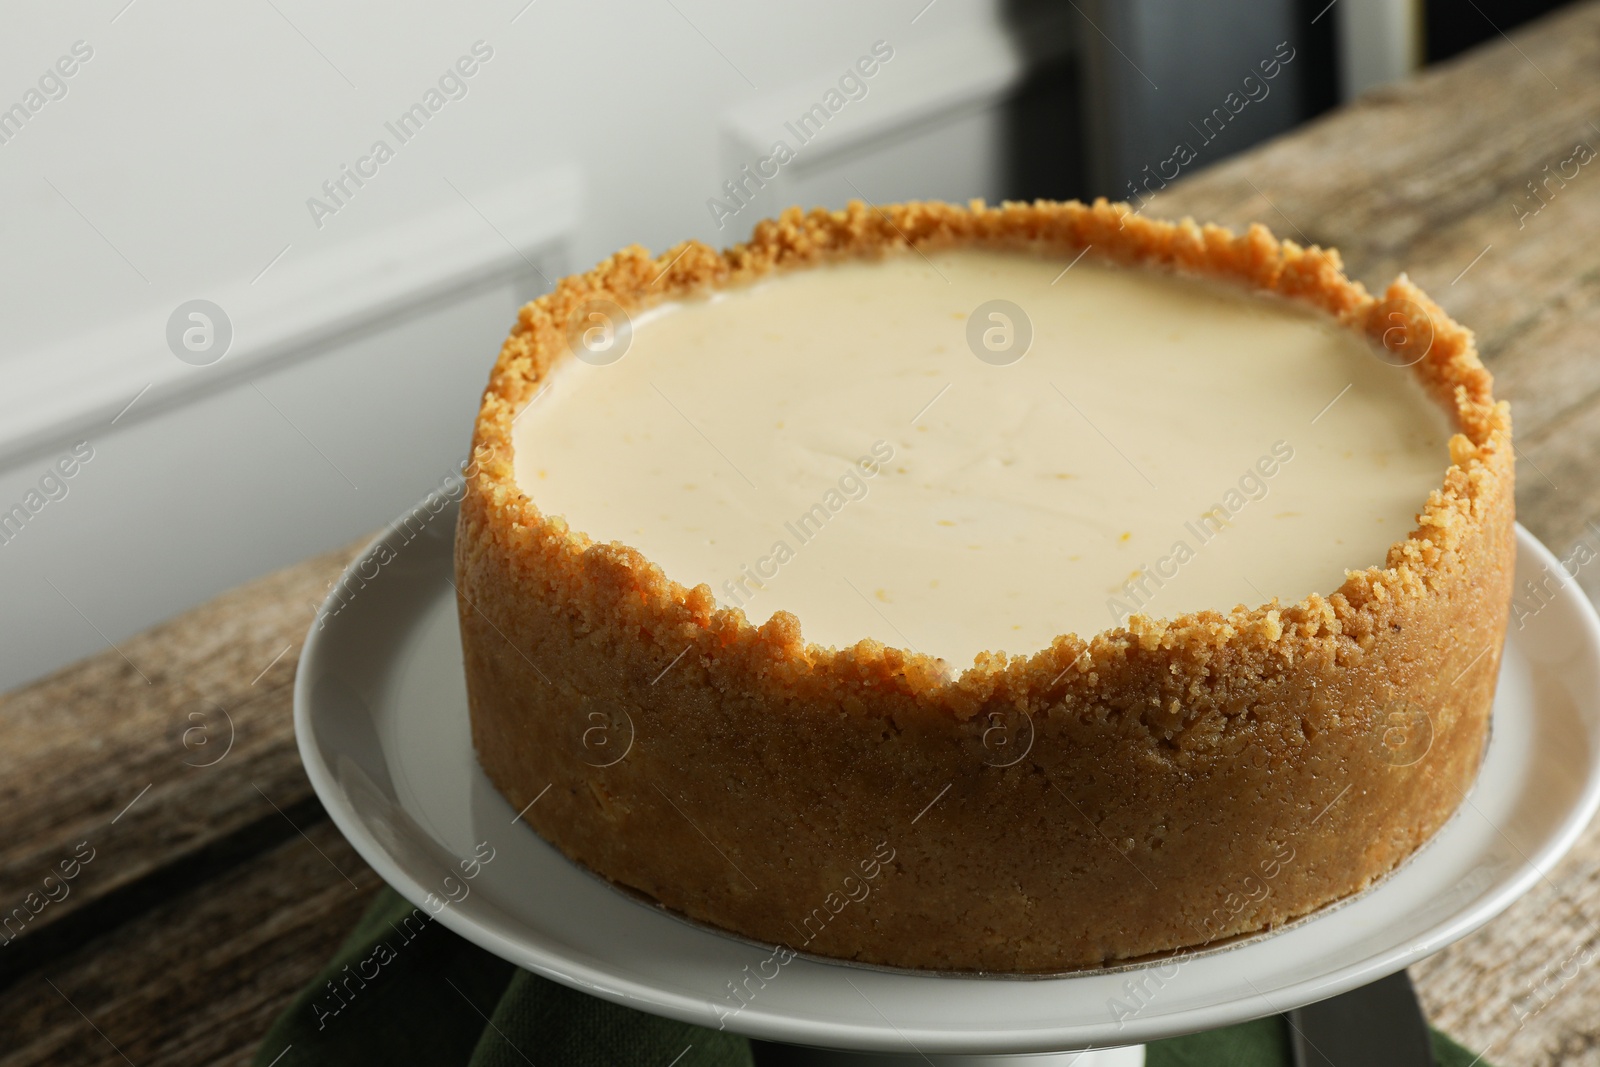 Photo of Tasty vegan tofu cheesecake on wooden table